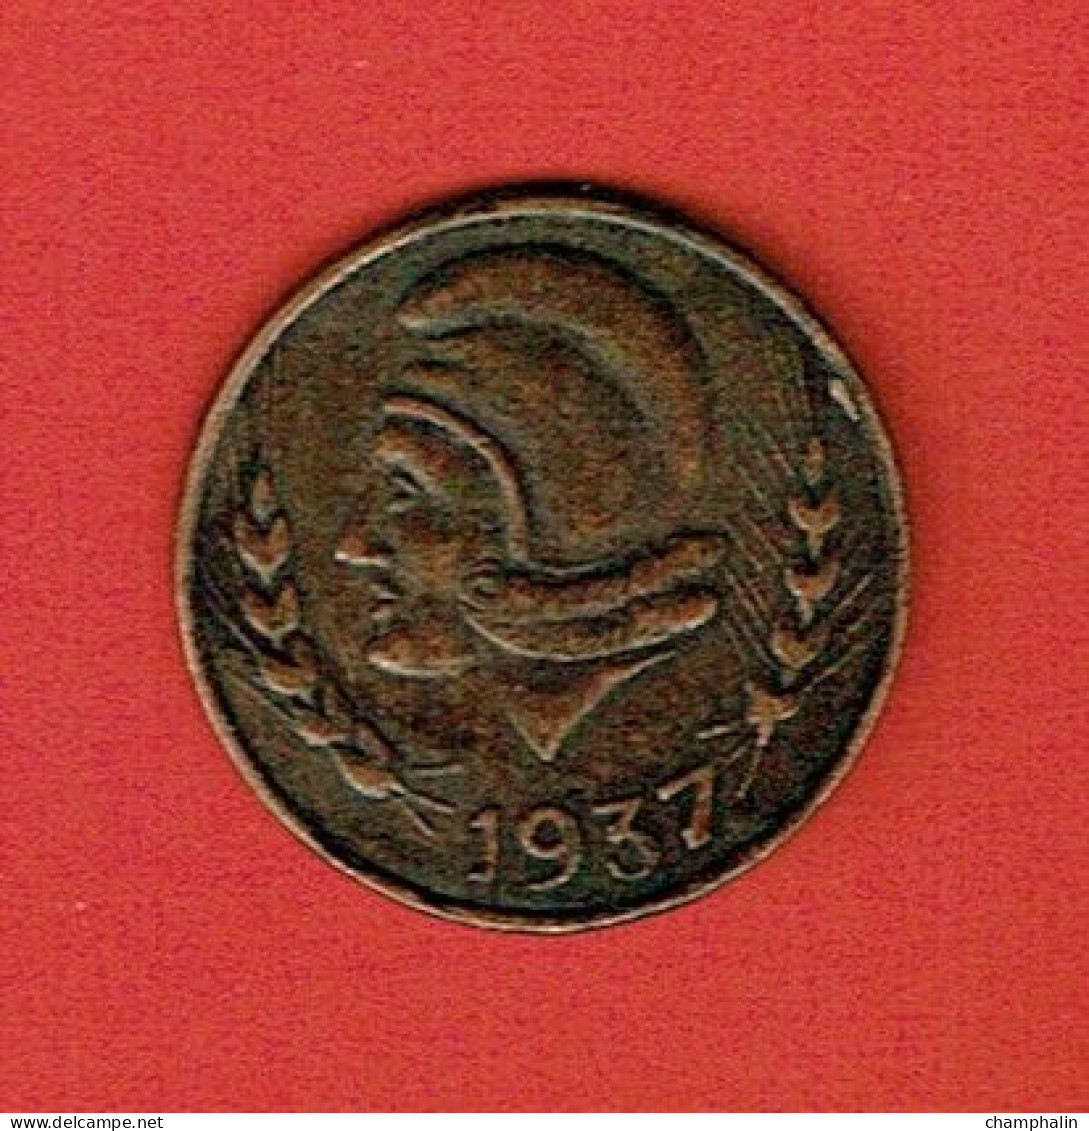 Espagne - Reproduction Monnaie - 25 Centimos 1937 - Consejo Municipal Ibi (Alicante) - Guerre Civile - Republican Location